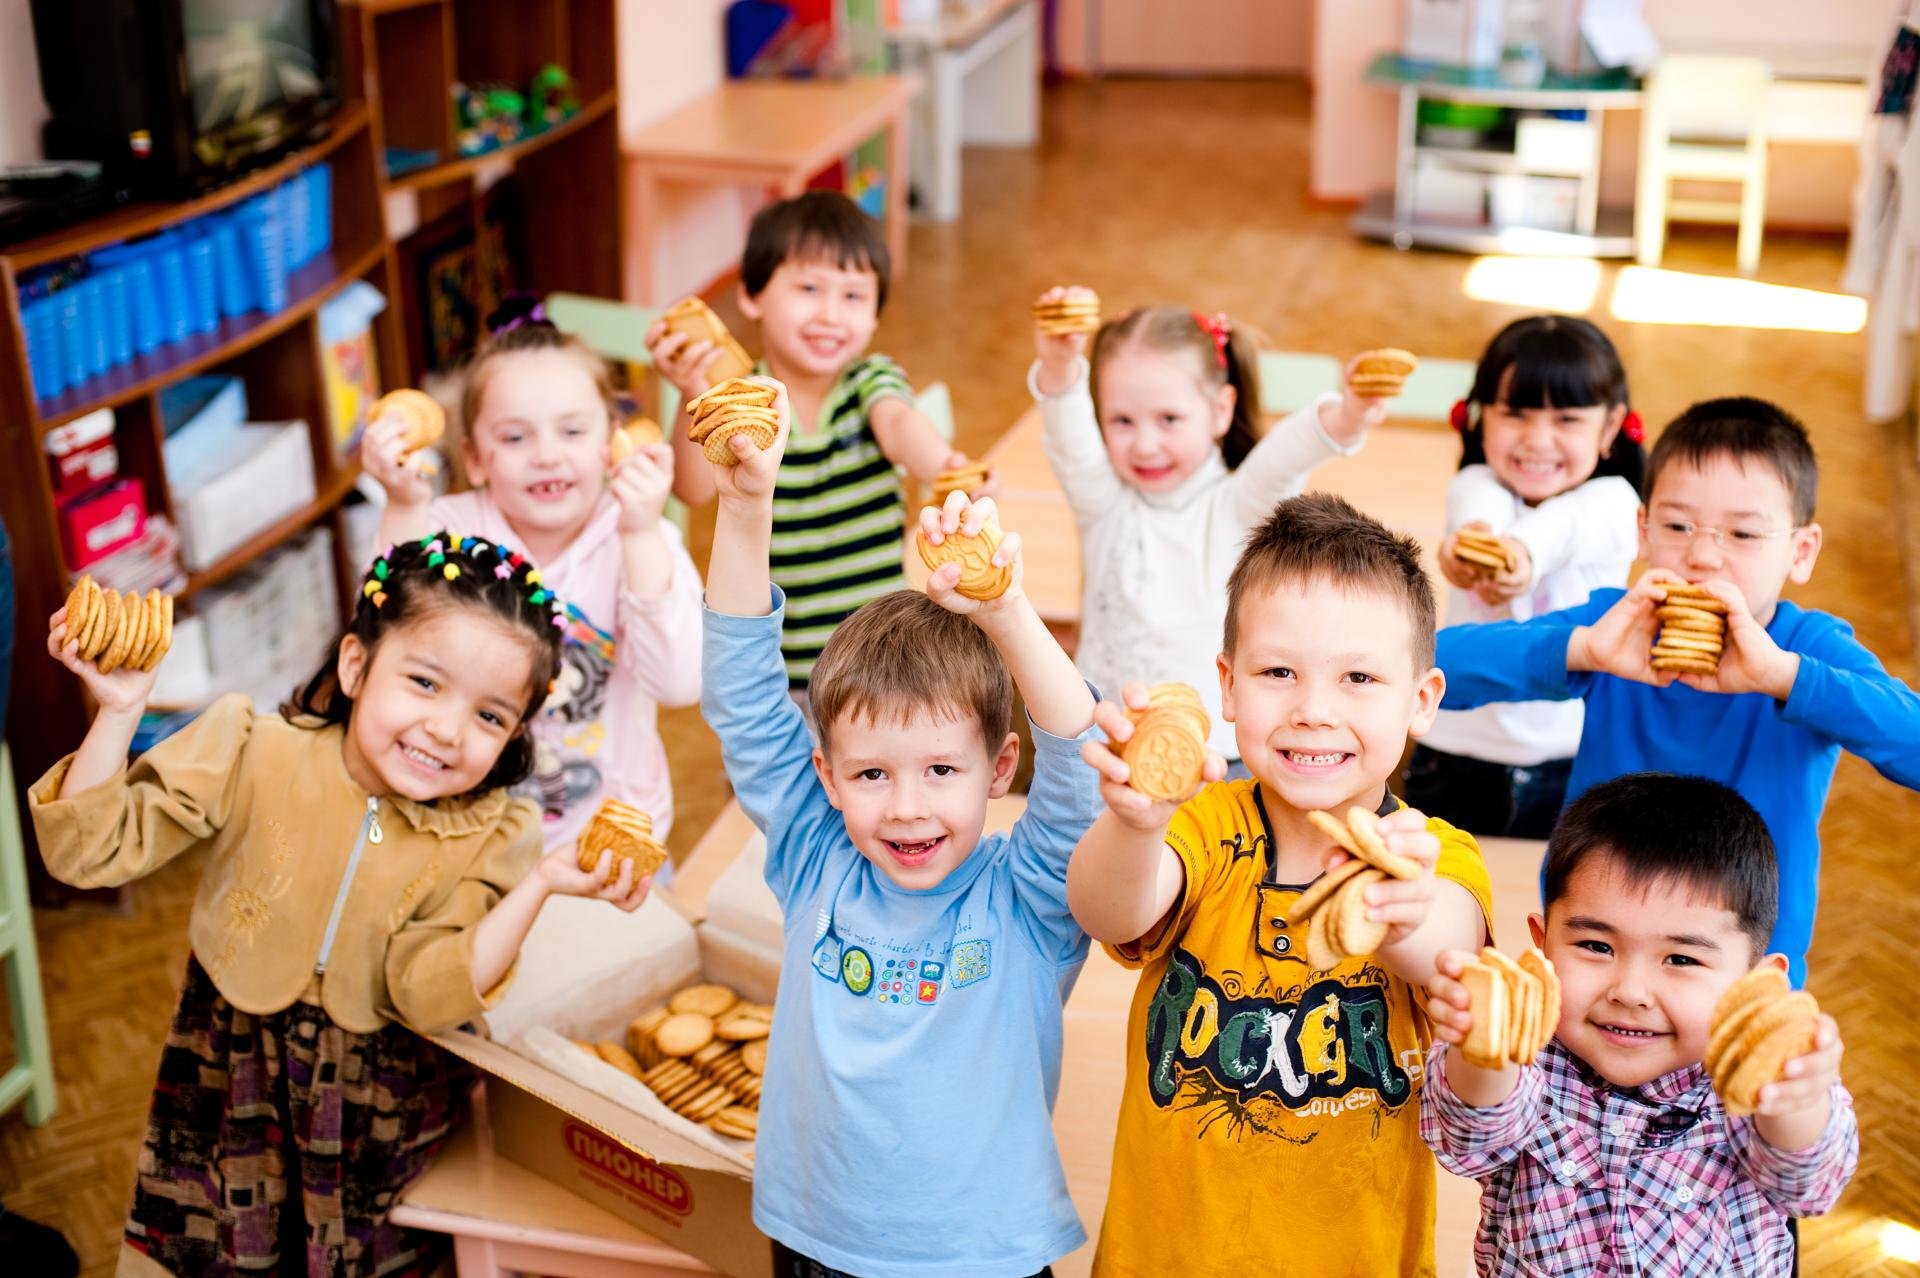 Картинка дети казахстана. Дети в детском саду. Фото детей в детском саду. Дети в саду. Радостные дети в детском саду.